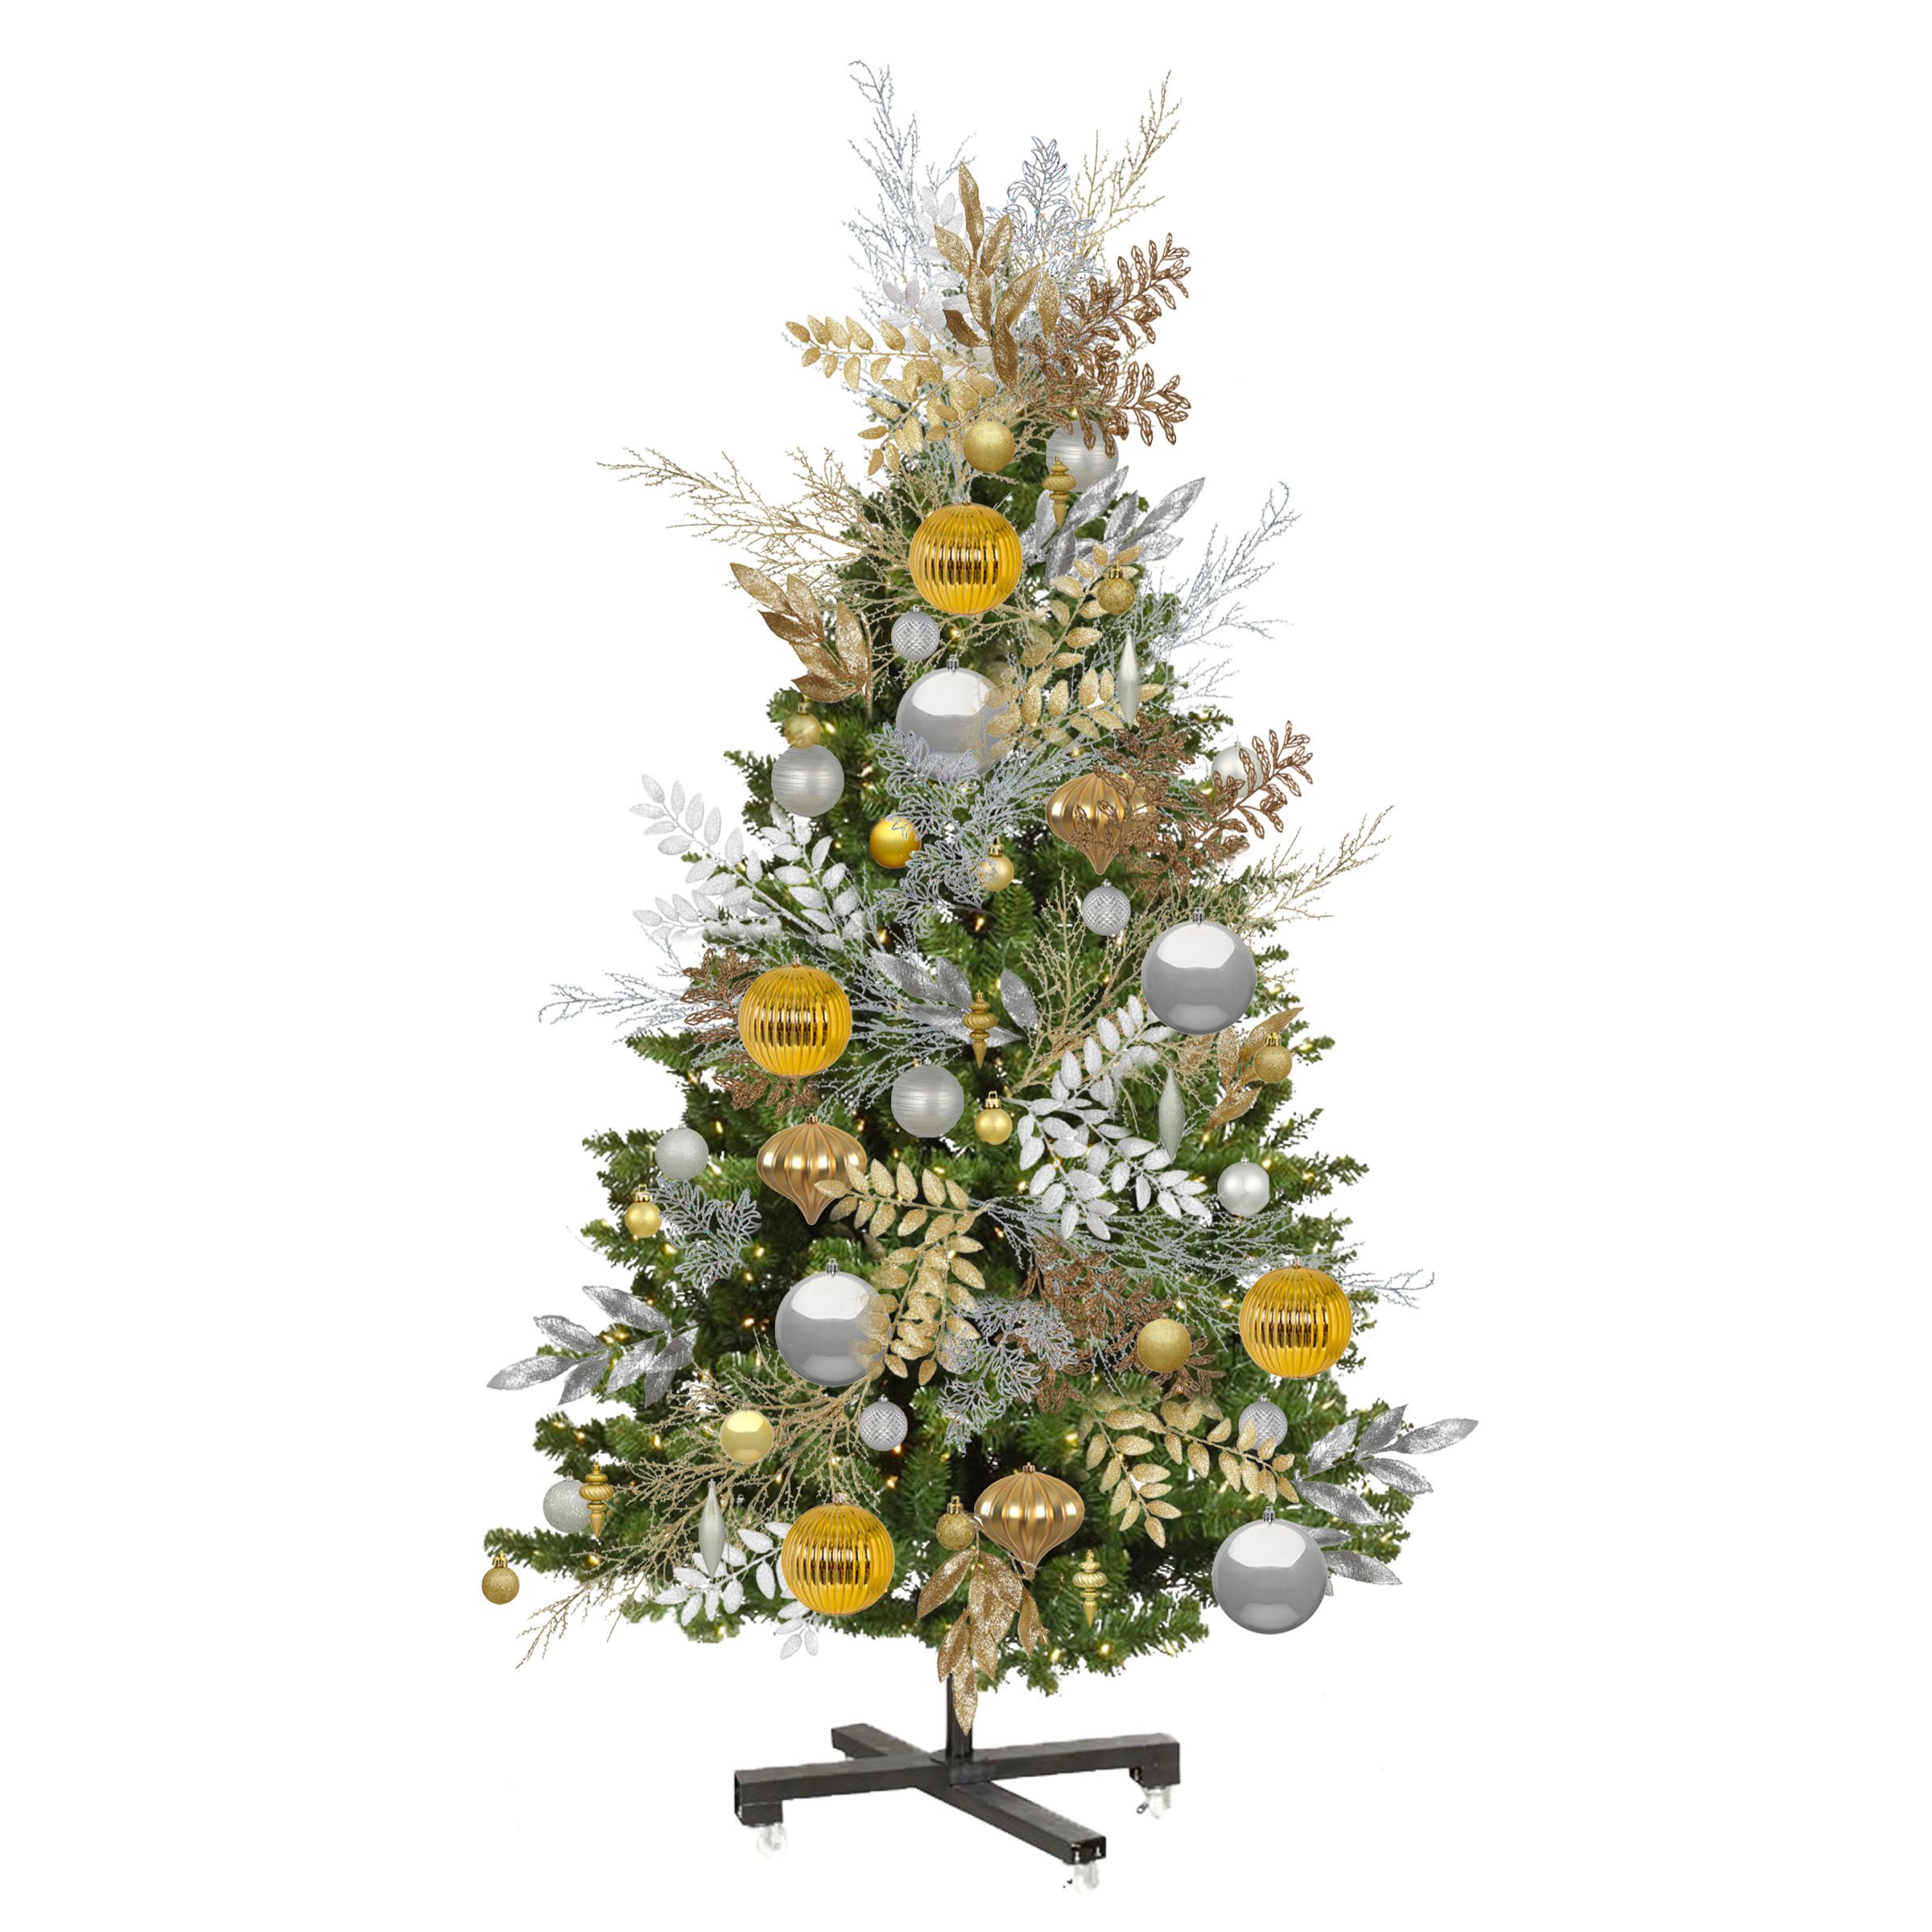 Tinsel Treasures - A gold and silver Christmas tree